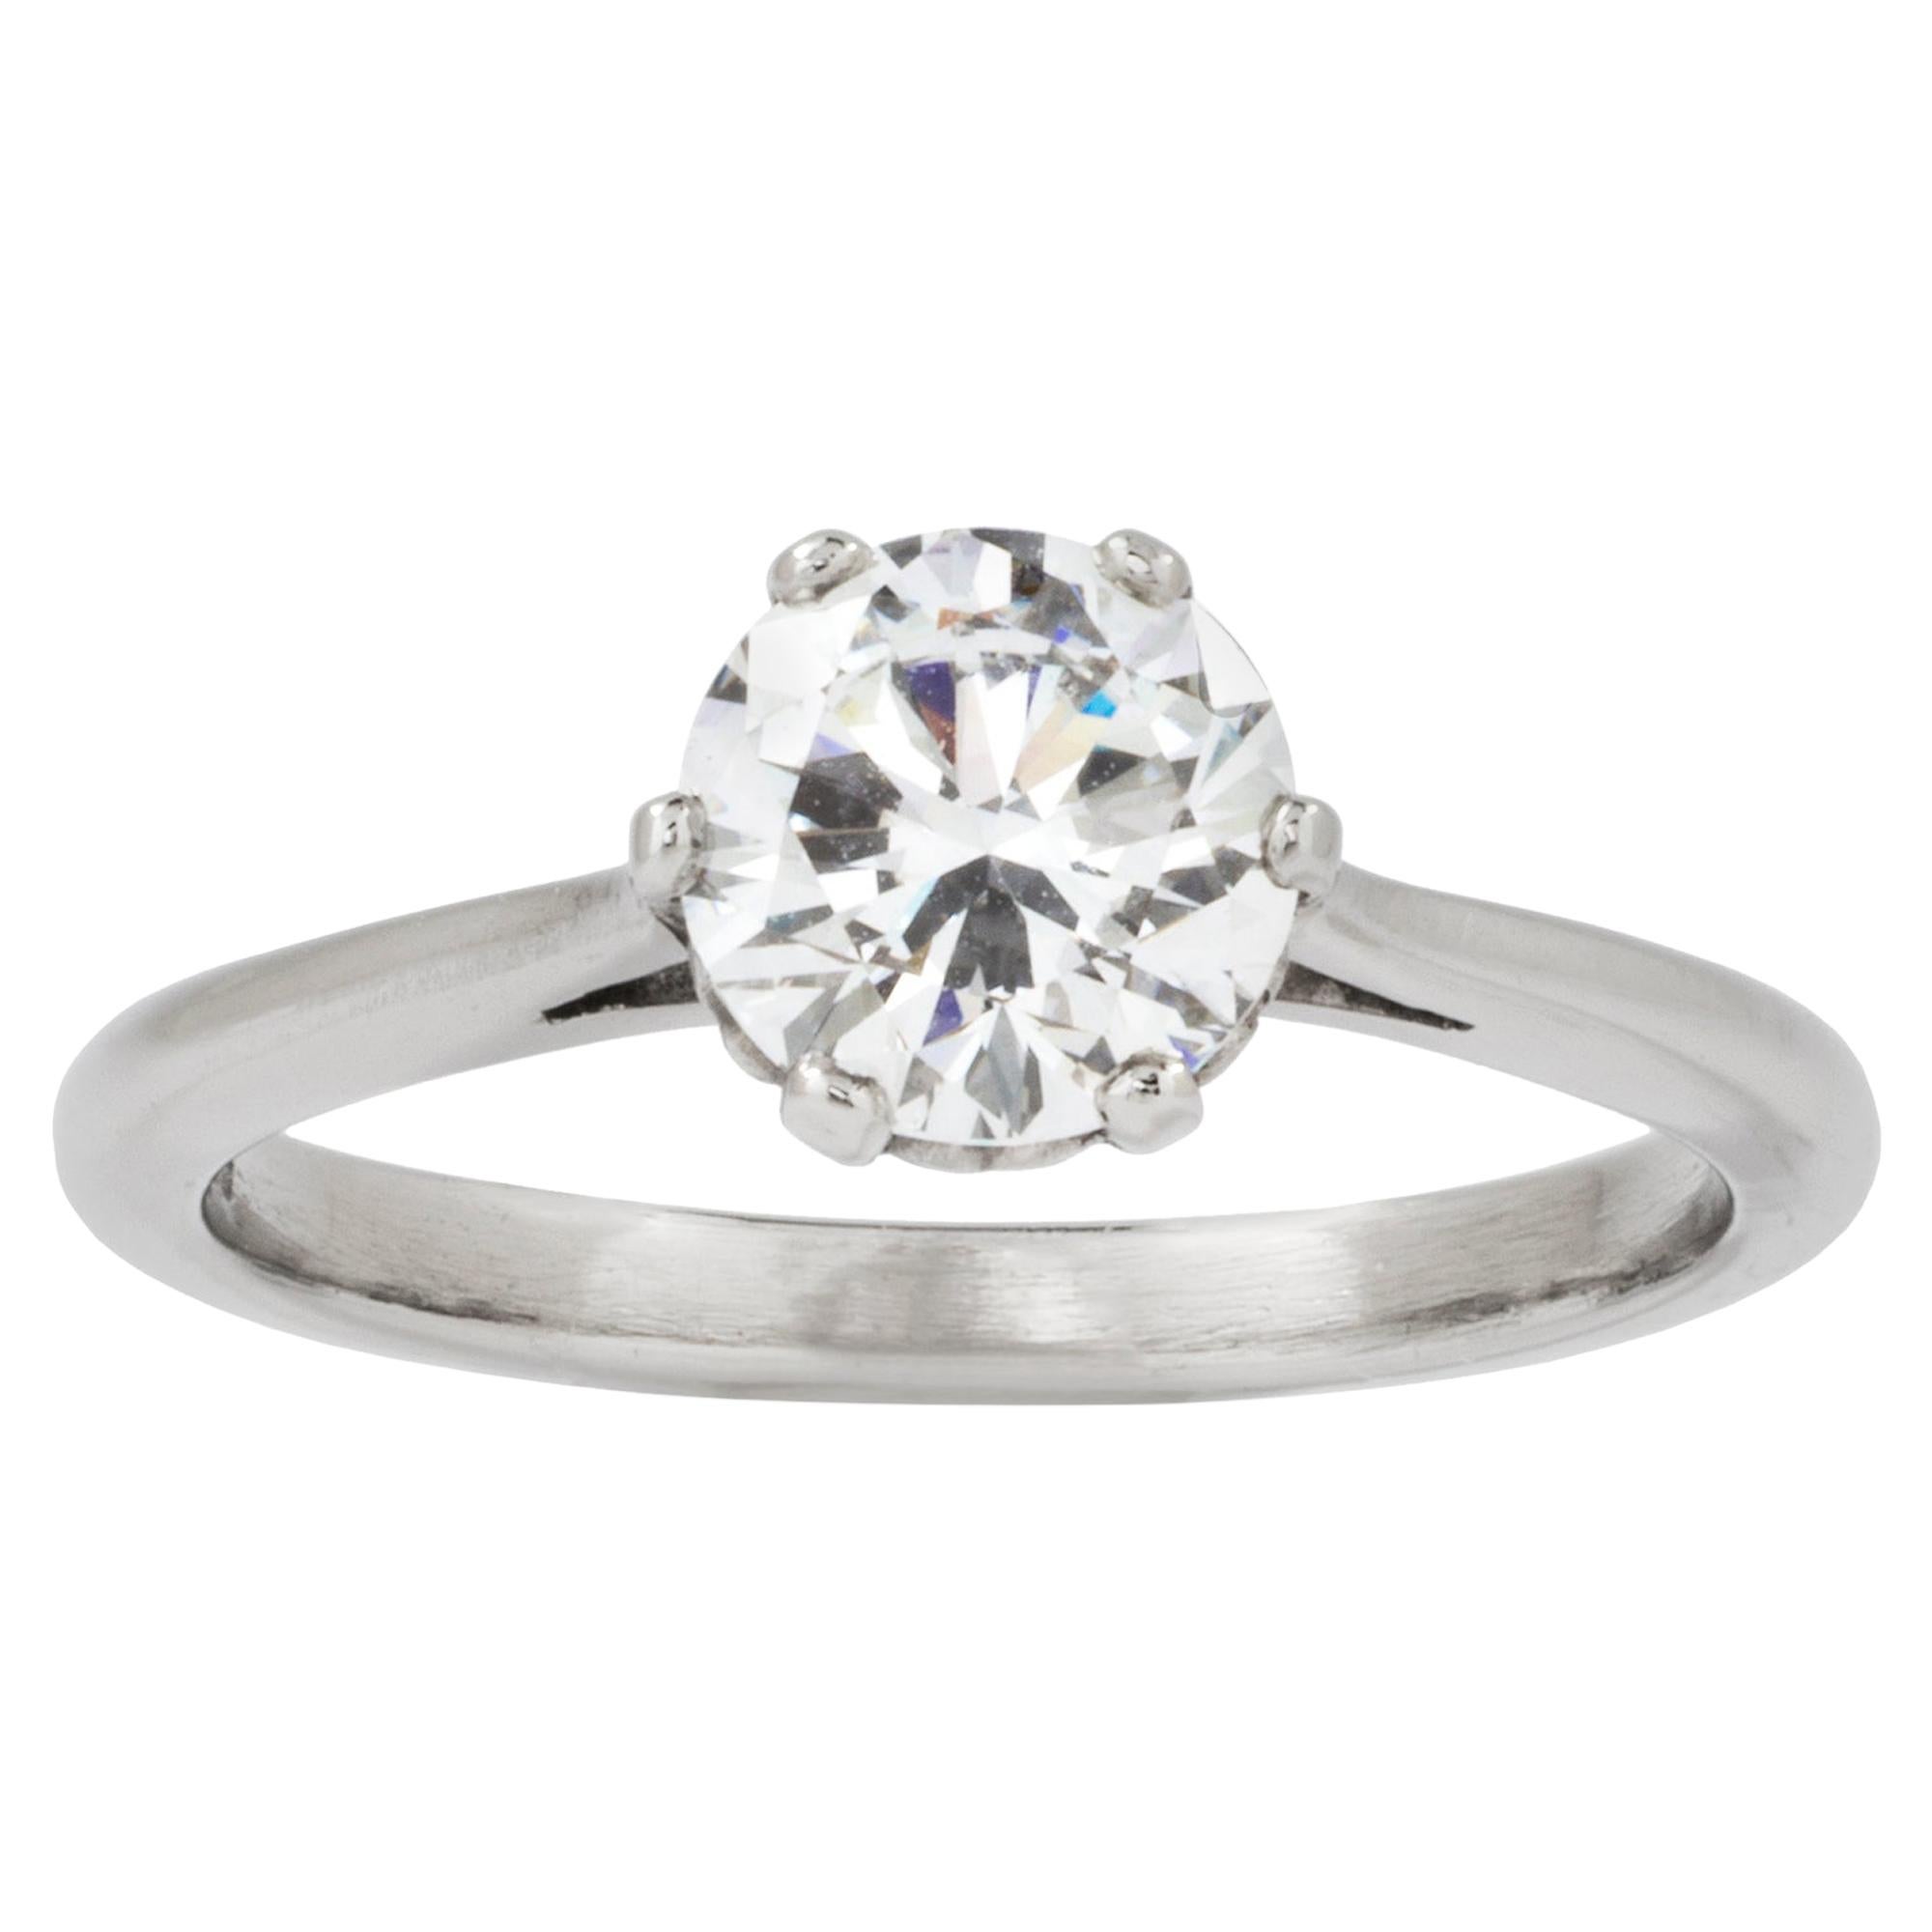 Gem-A Certified 0.89 Carat D Color Solitaire Diamond Ring